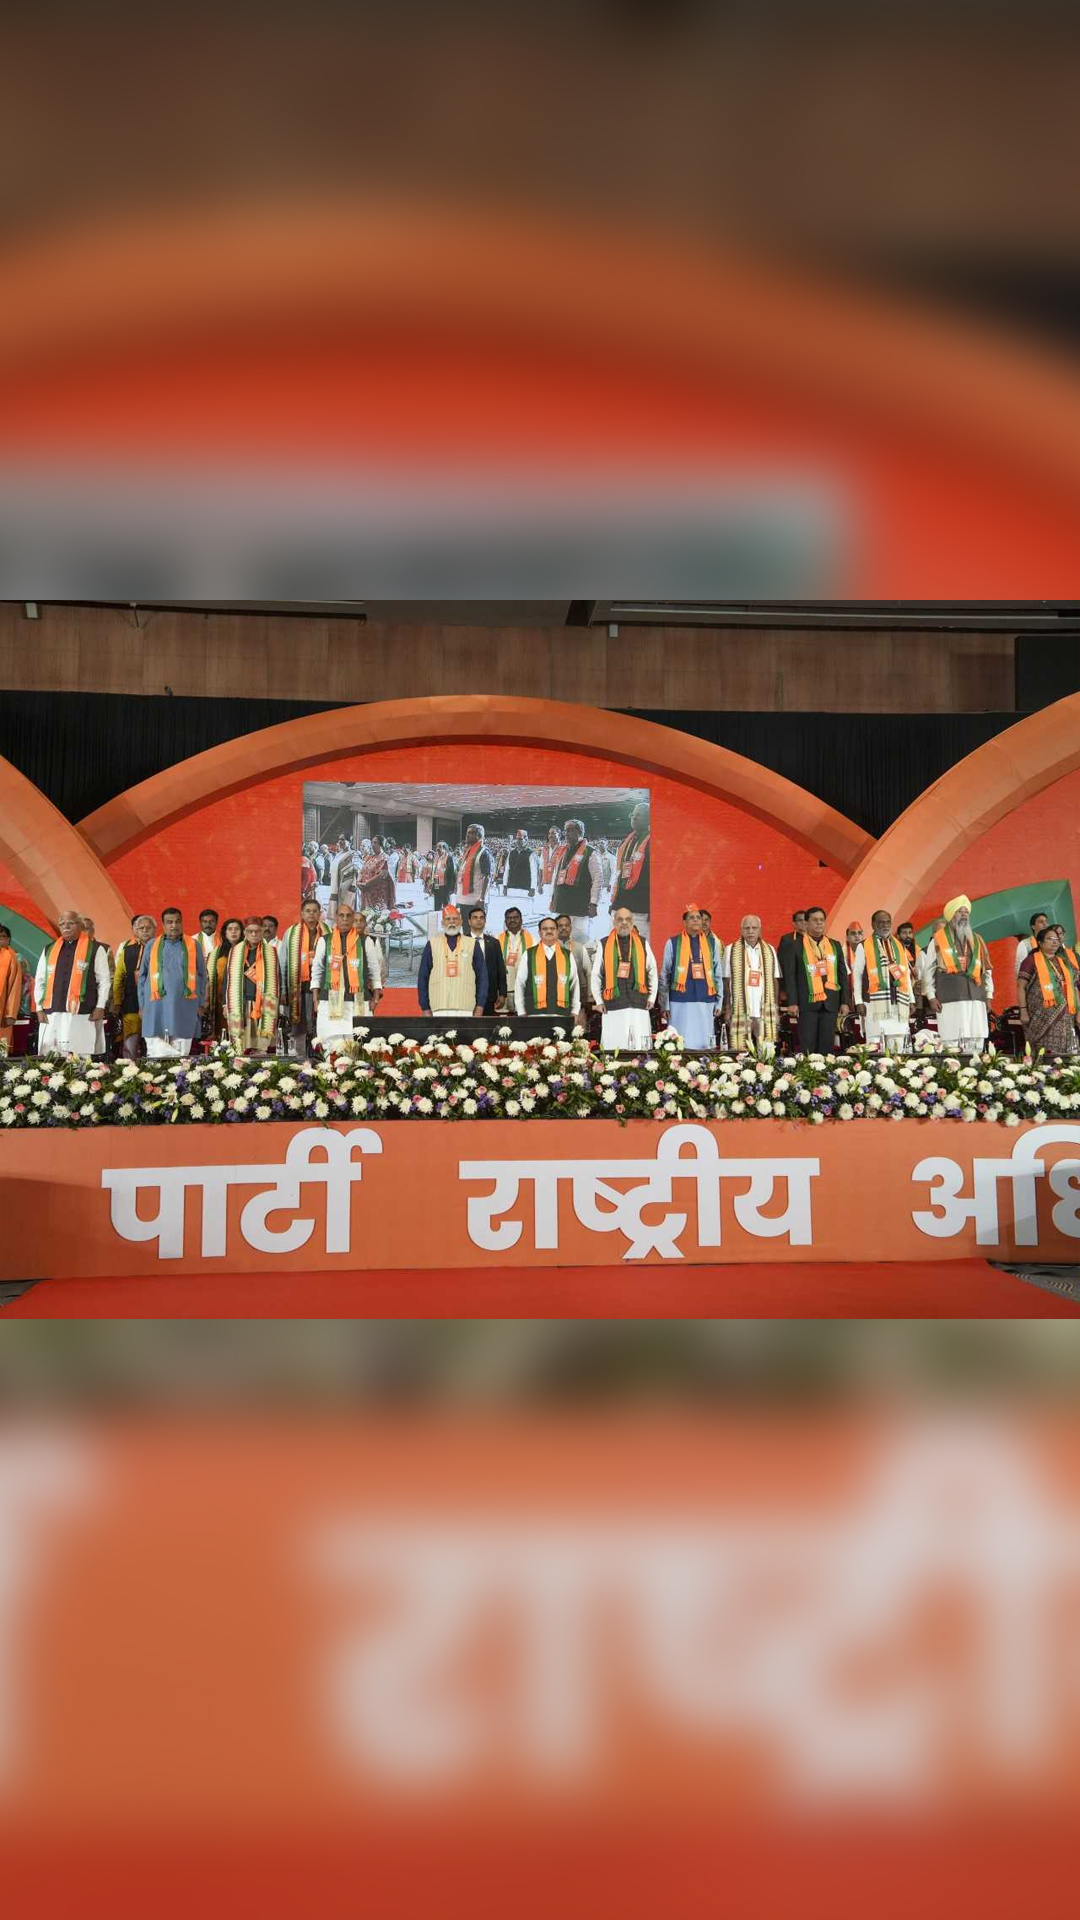 BJP National Council meeting at Delhi's Bharat Mandapam in pics